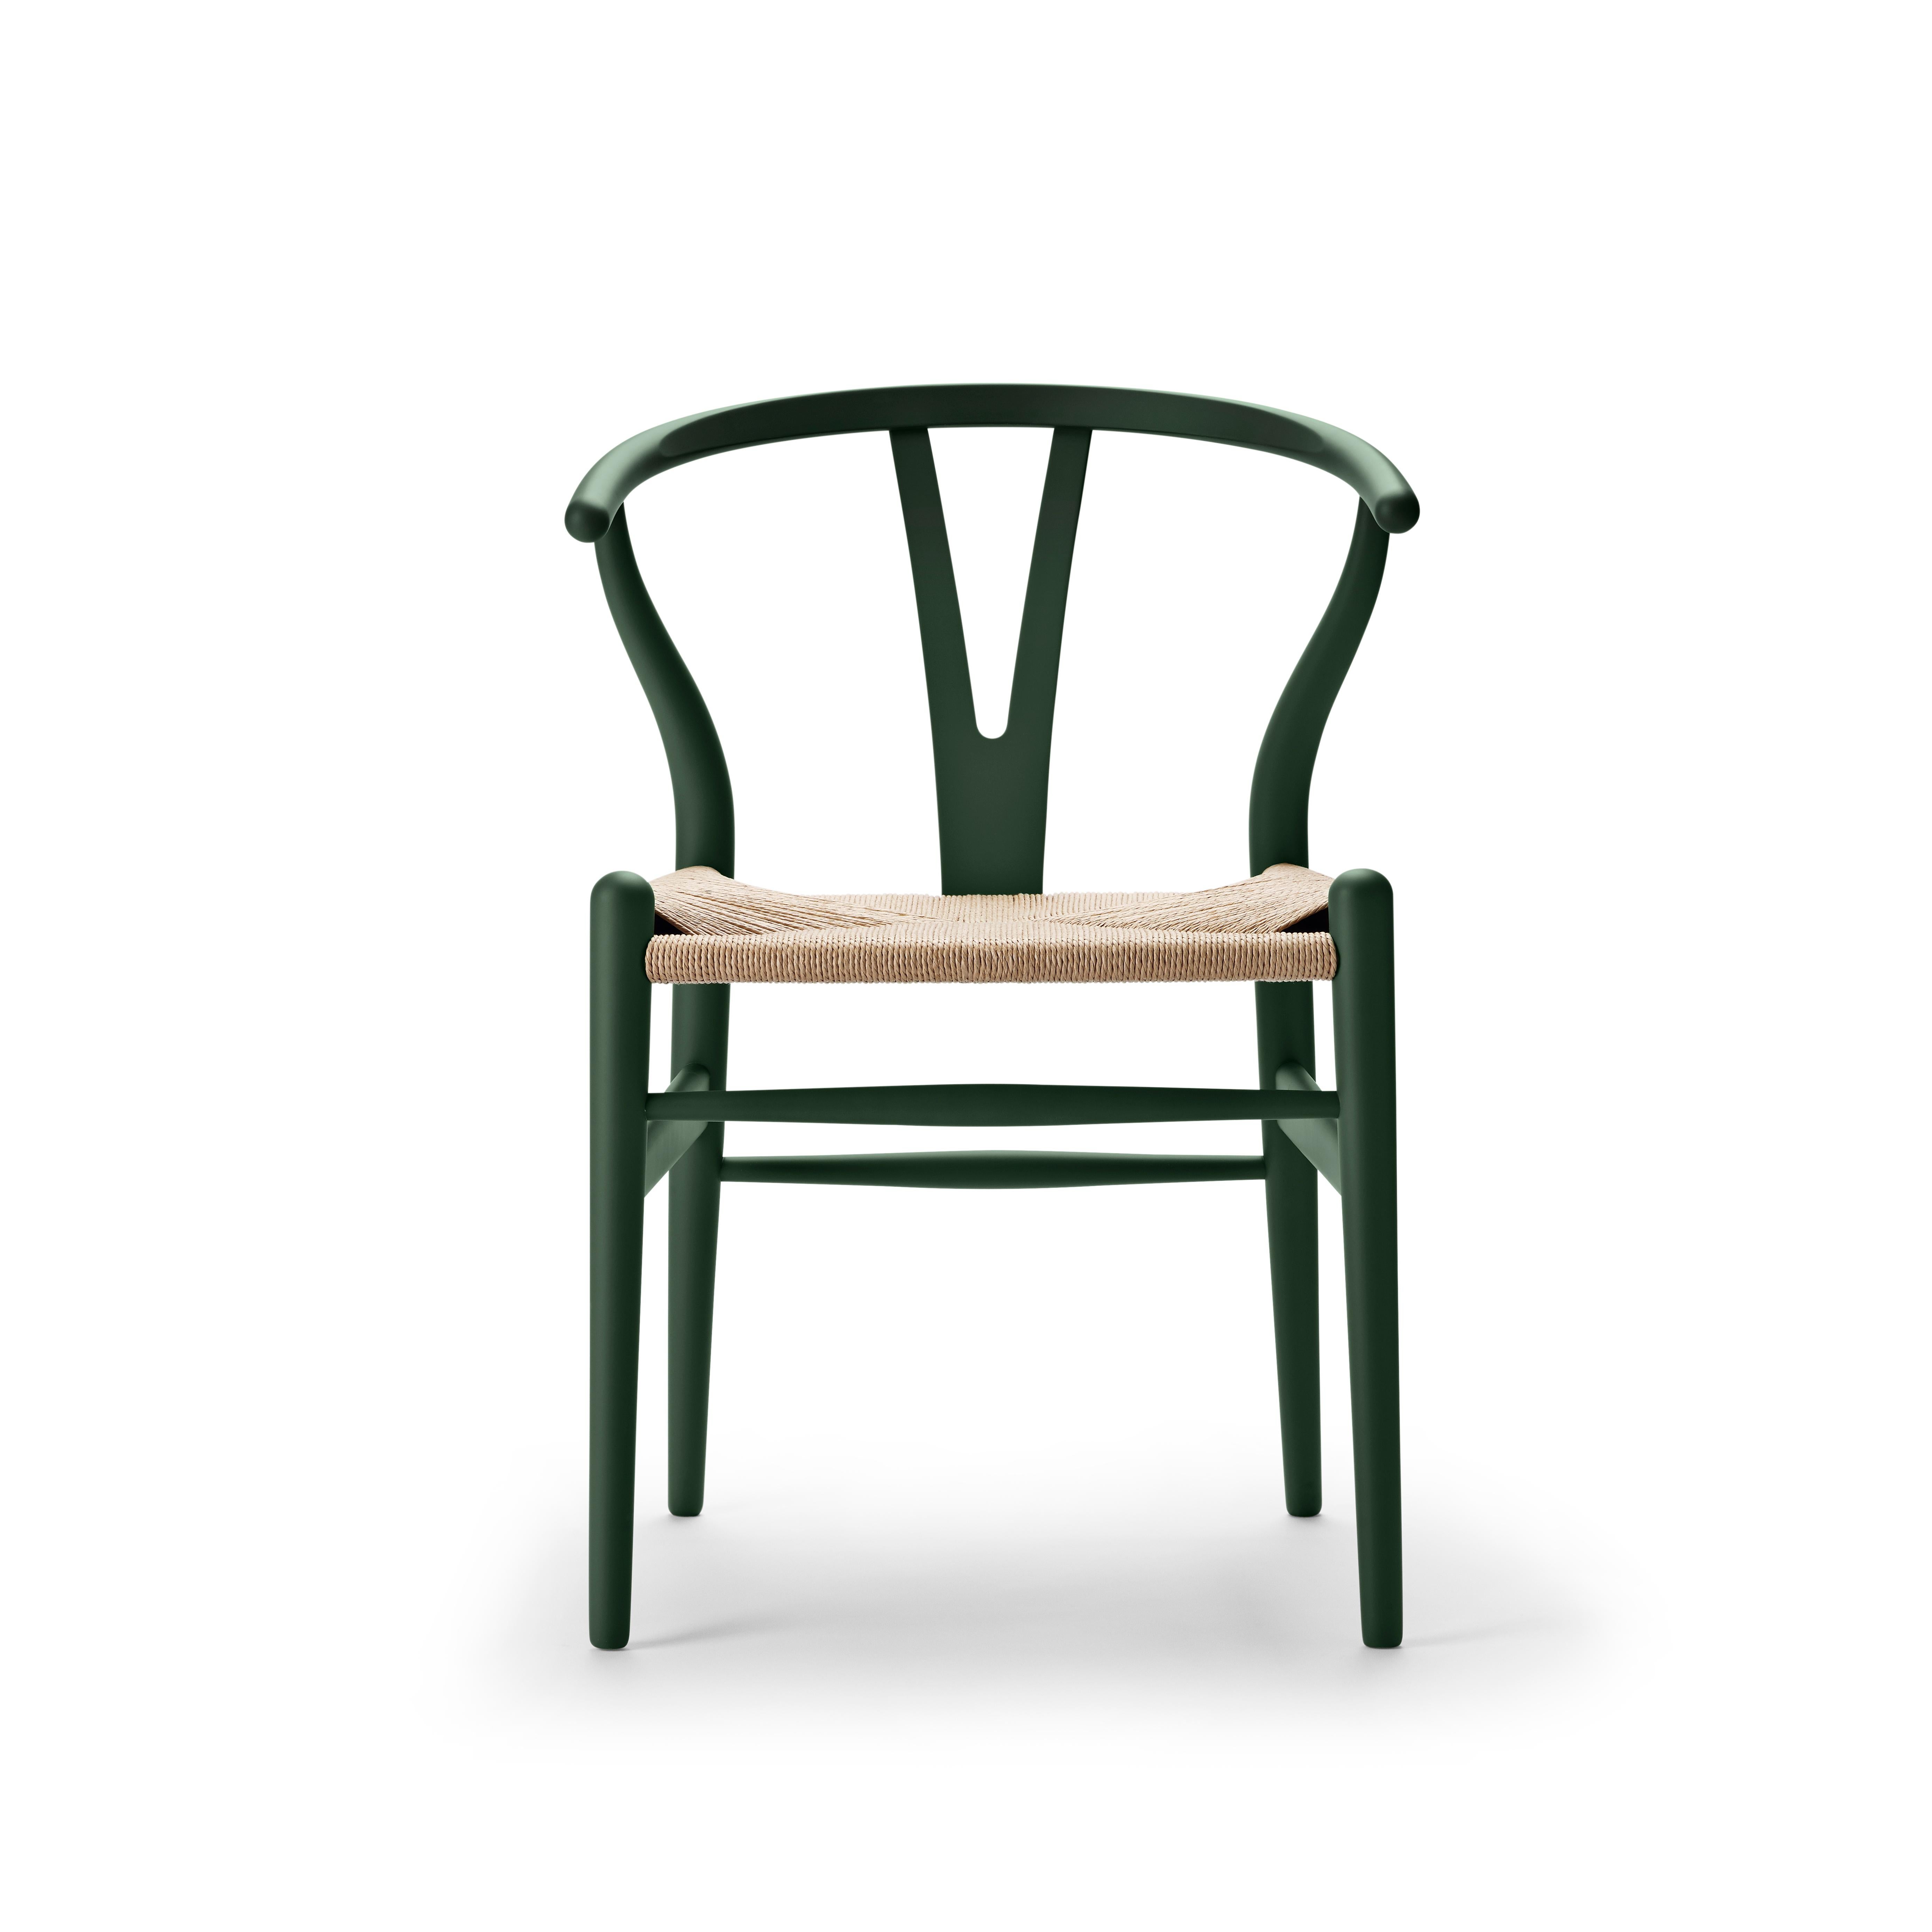 Green (Soft Green) CH24 Wishbone Chair in Soft Colors by Hans J. Wegner